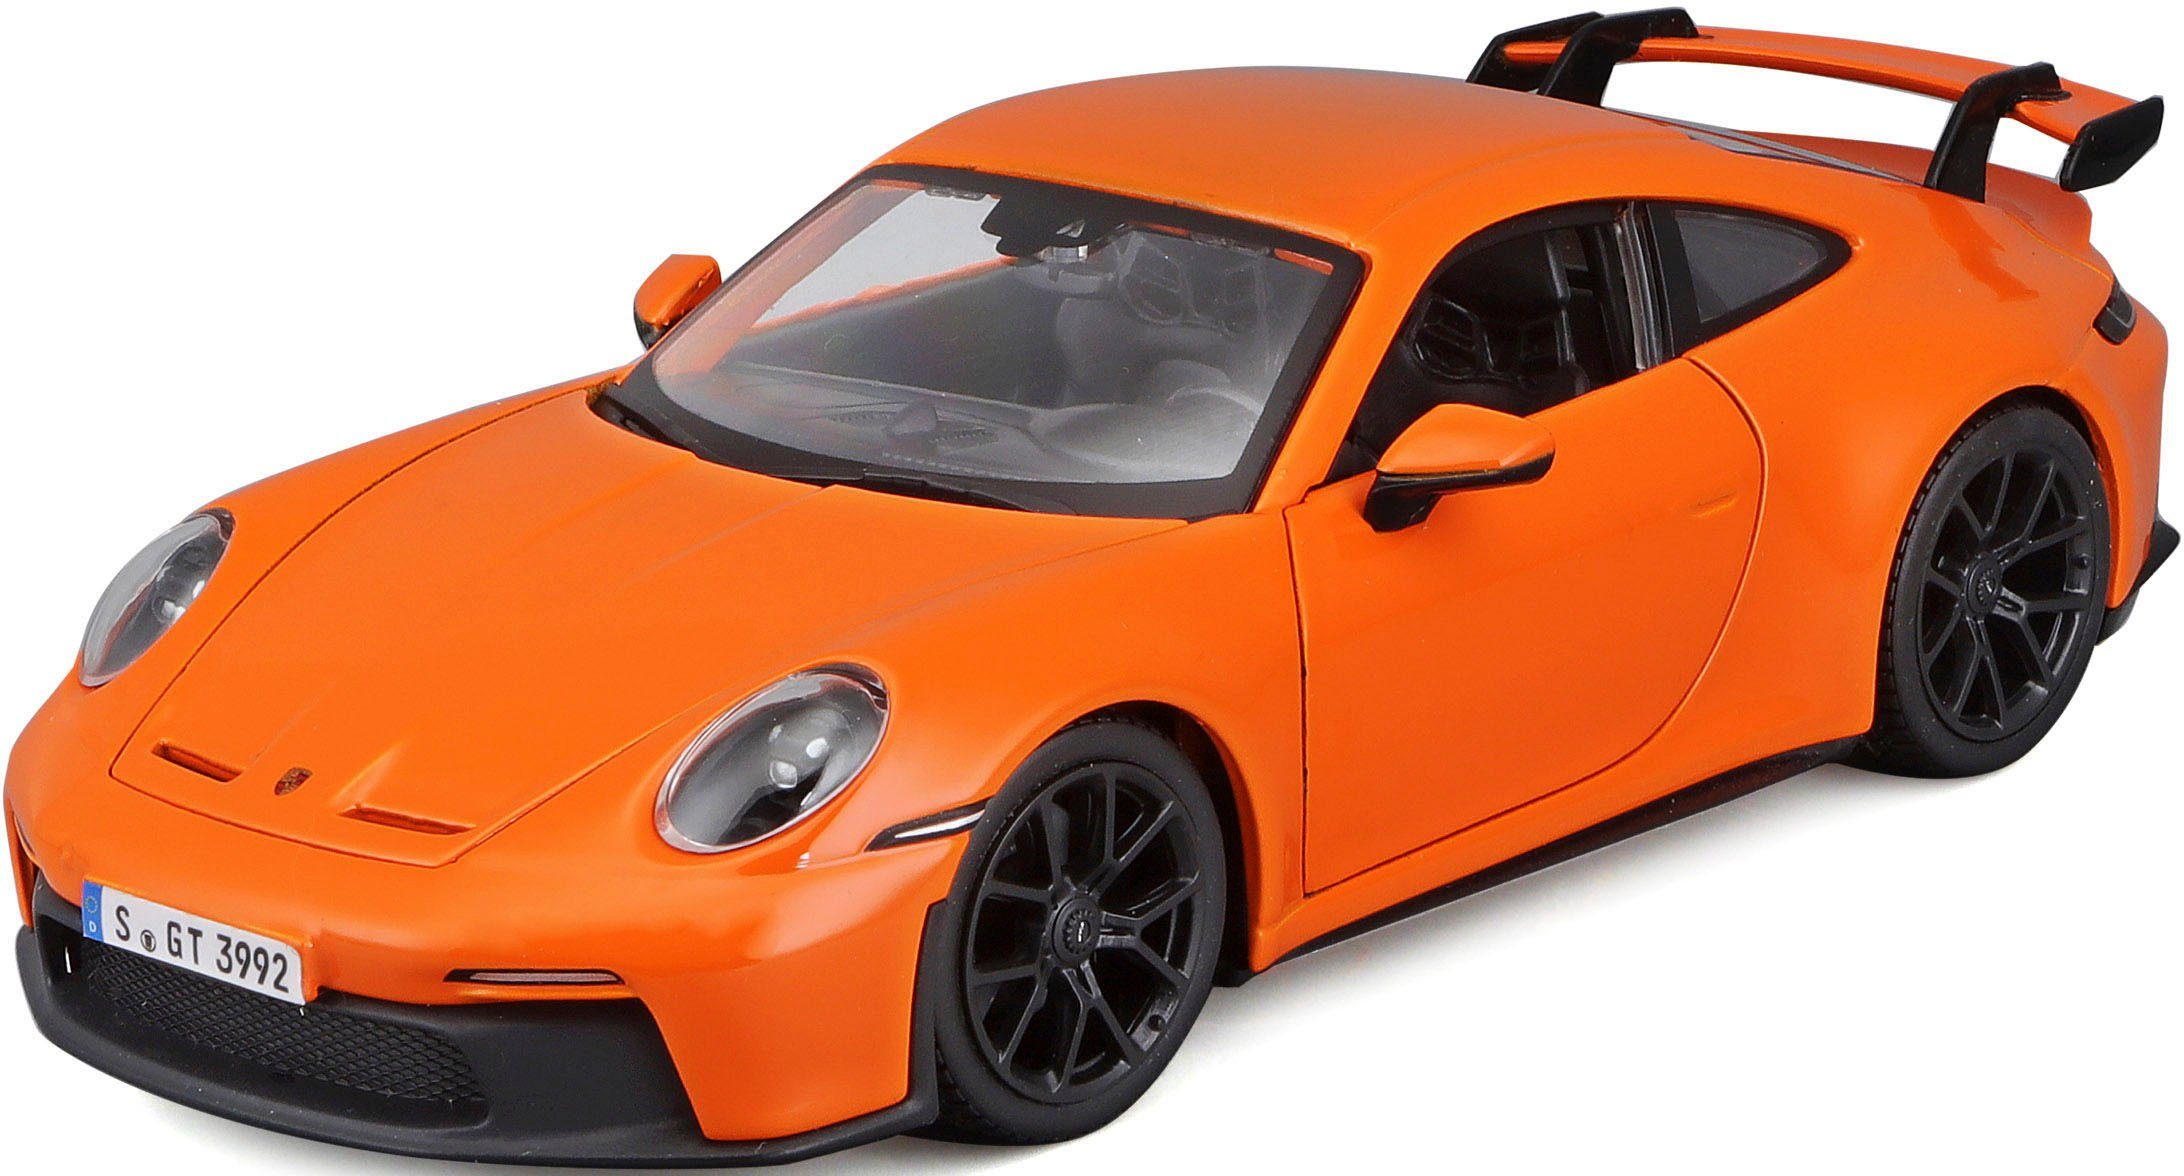 Bburago Sammlerauto Porsche 911 GT3 ´21,orange, Maßstab 1:24